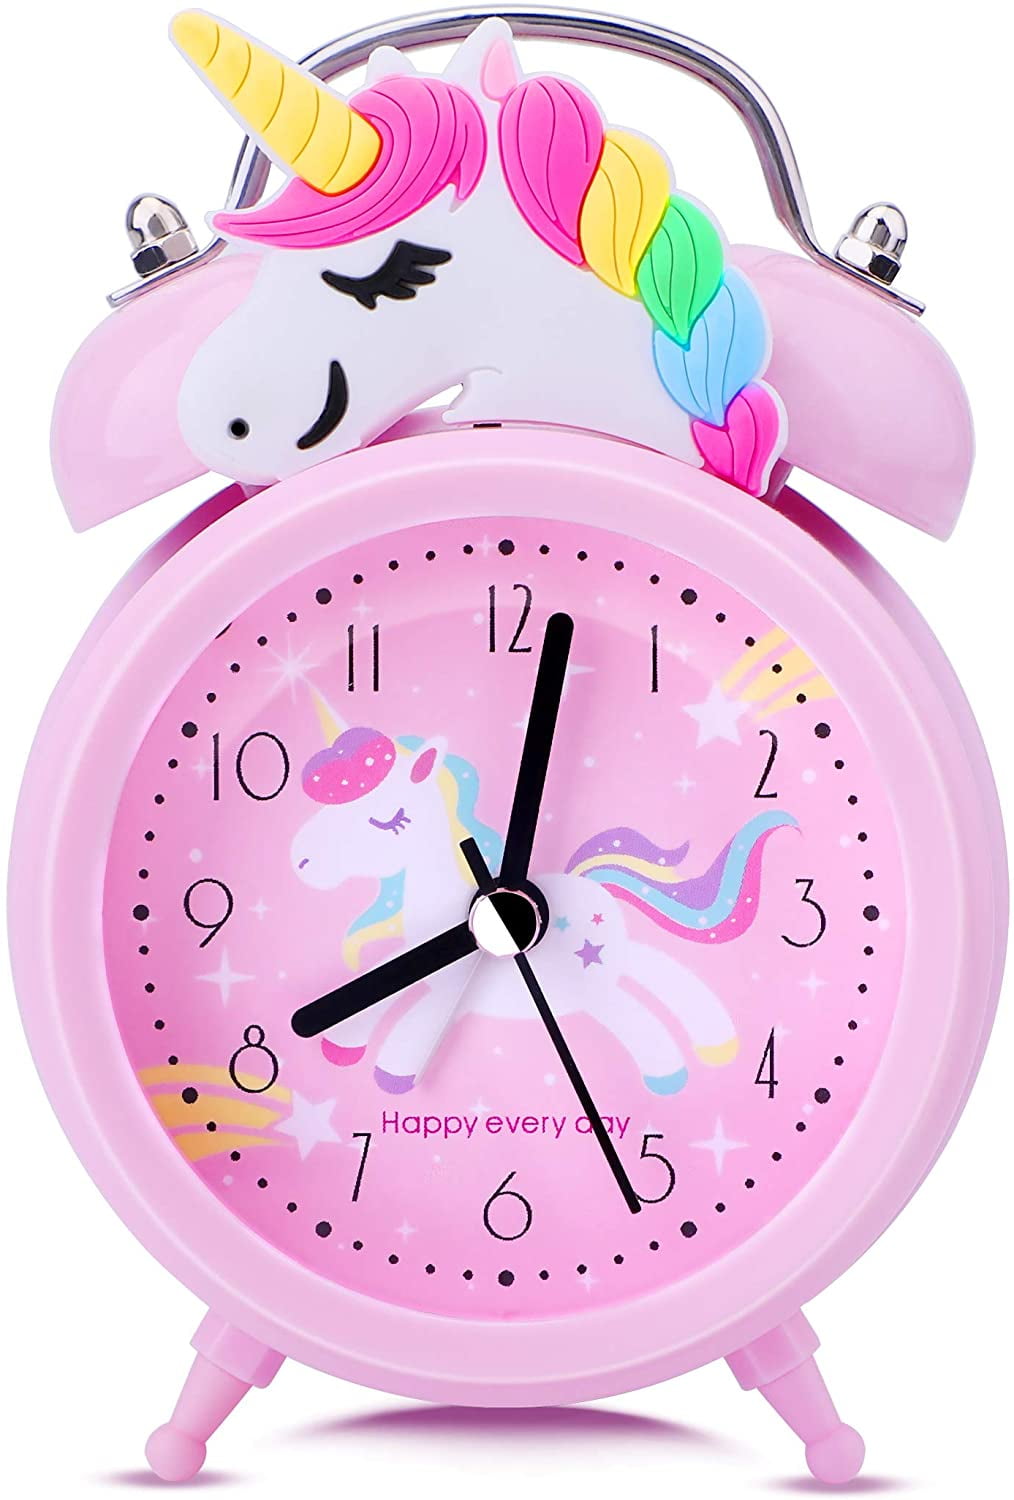 Disney Princess Alarm Desk Clock 3.75" Home or Office Decor W228 Nice For Gifts 